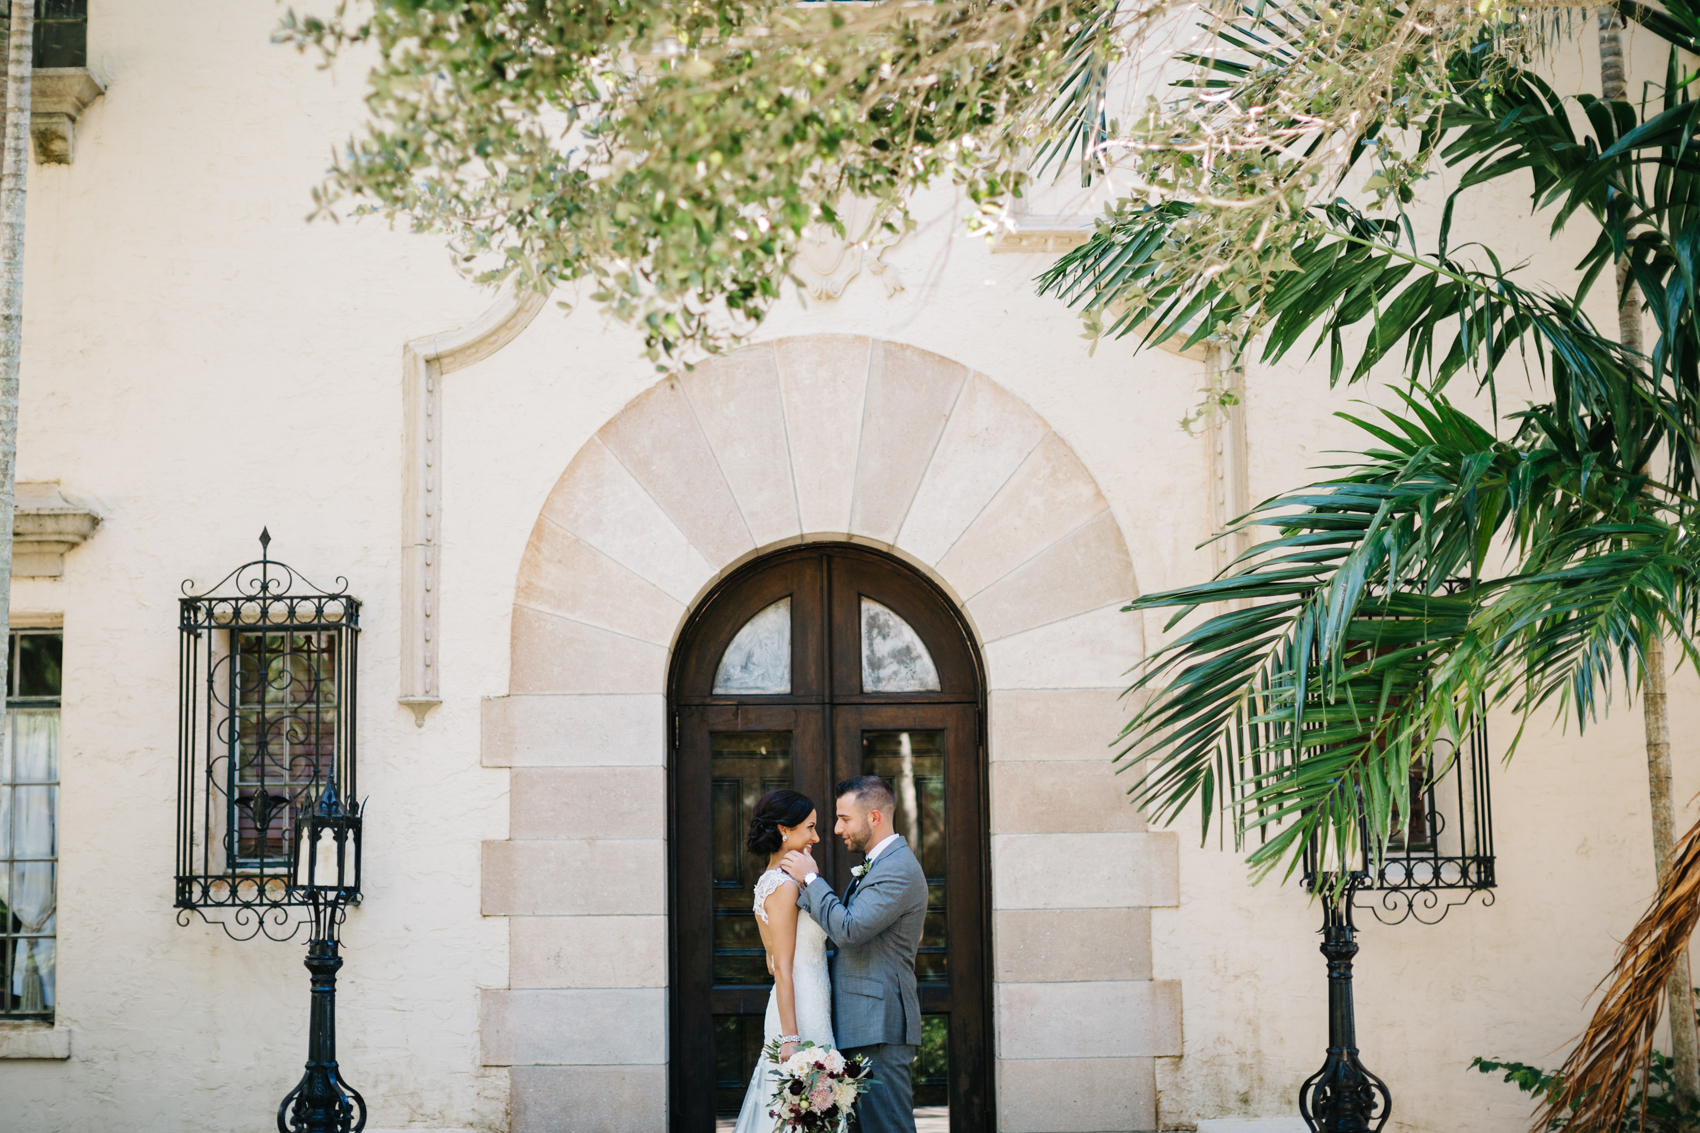 Romantic and candid wedding photos at the Powel Crosley Sarasota